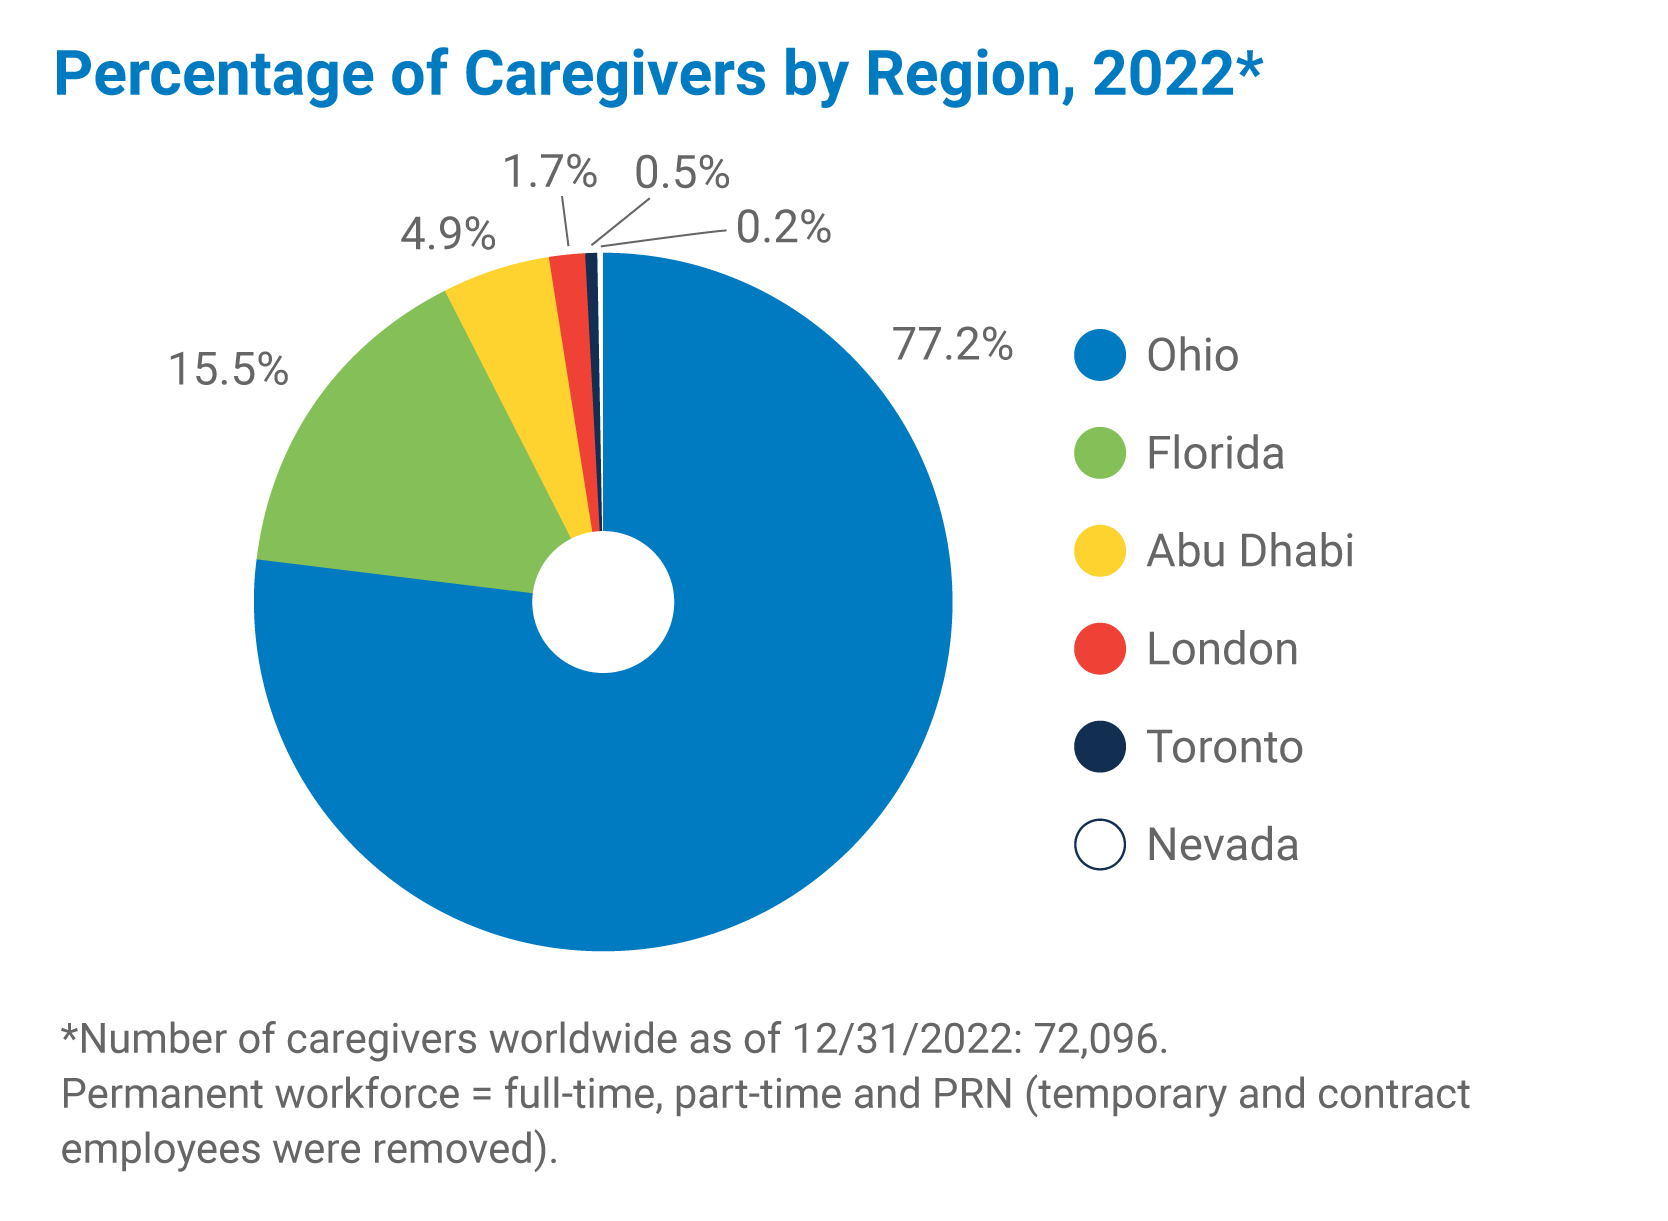 Percentage of caregivers by region 2022